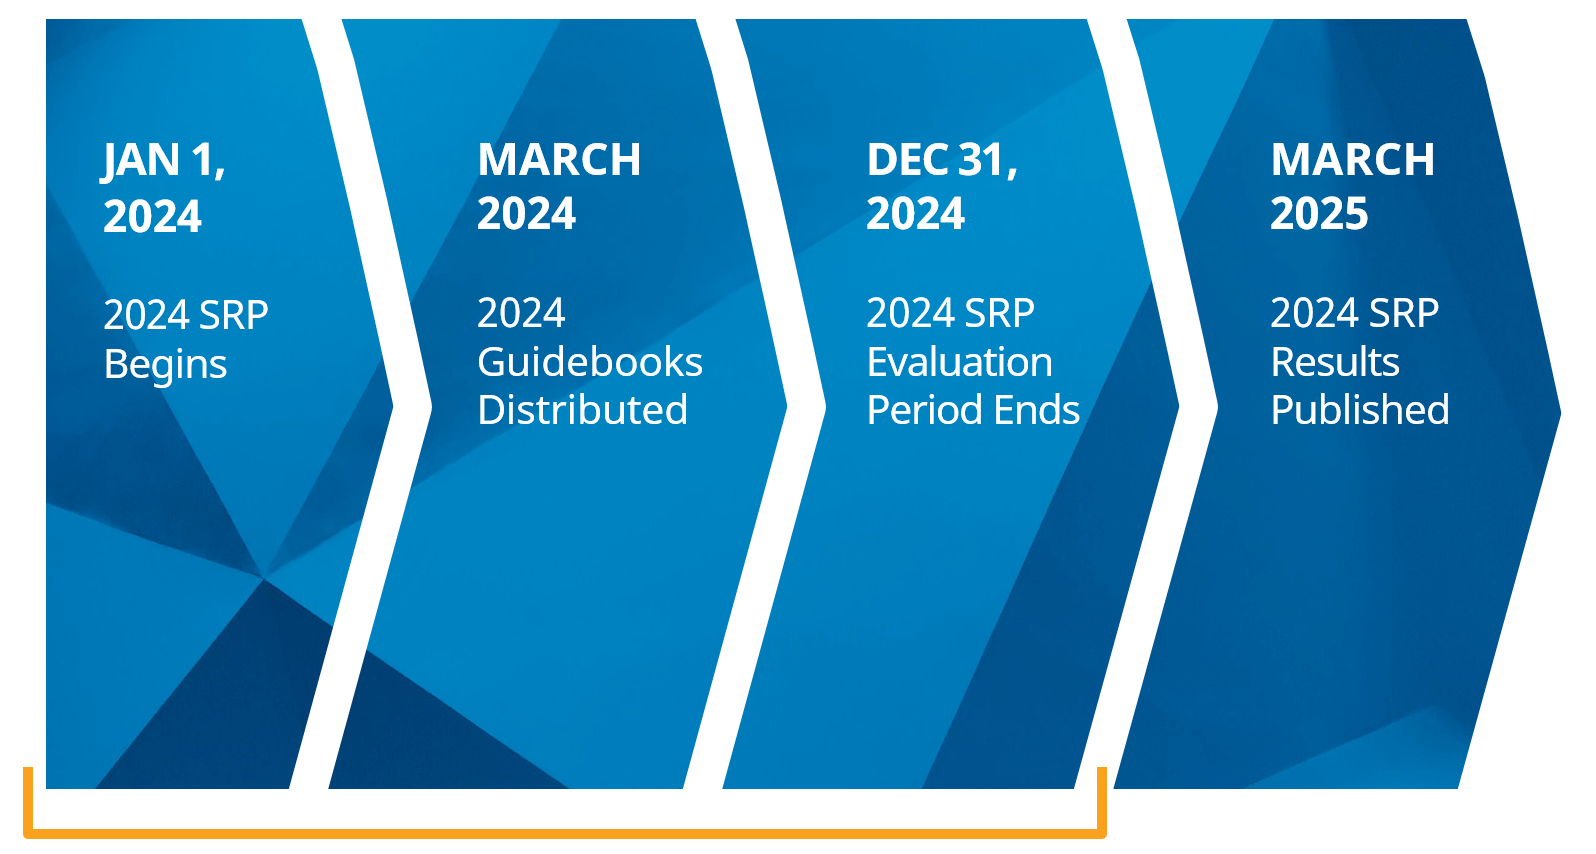 2024 SRP Timeline Chart - Jan 1, 2024: 2024 SRP Begins; March 2024: 2024 Guidebooks Distributed; Dec 31, 2024: 2024 SRP Evaluation Period Ends; March 2025: 2024 SRP Results Published